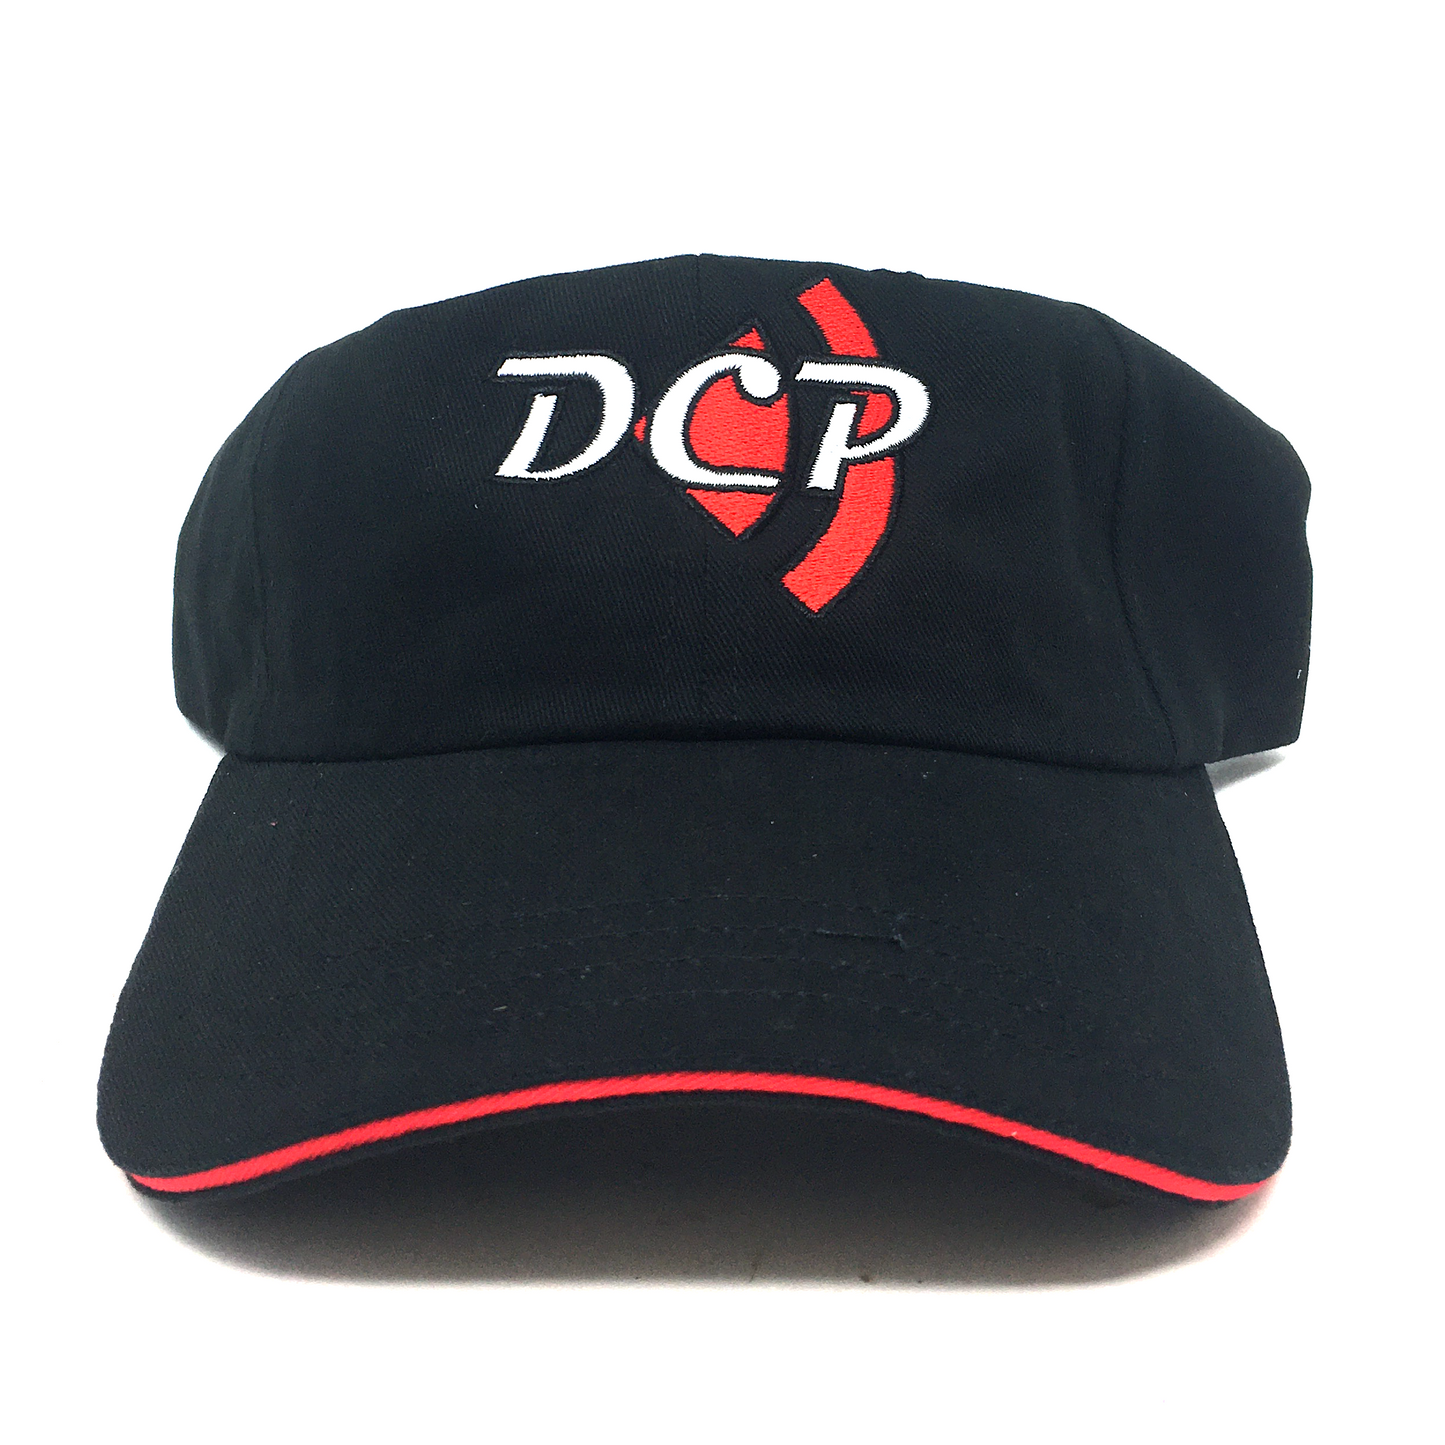 DCP Hat